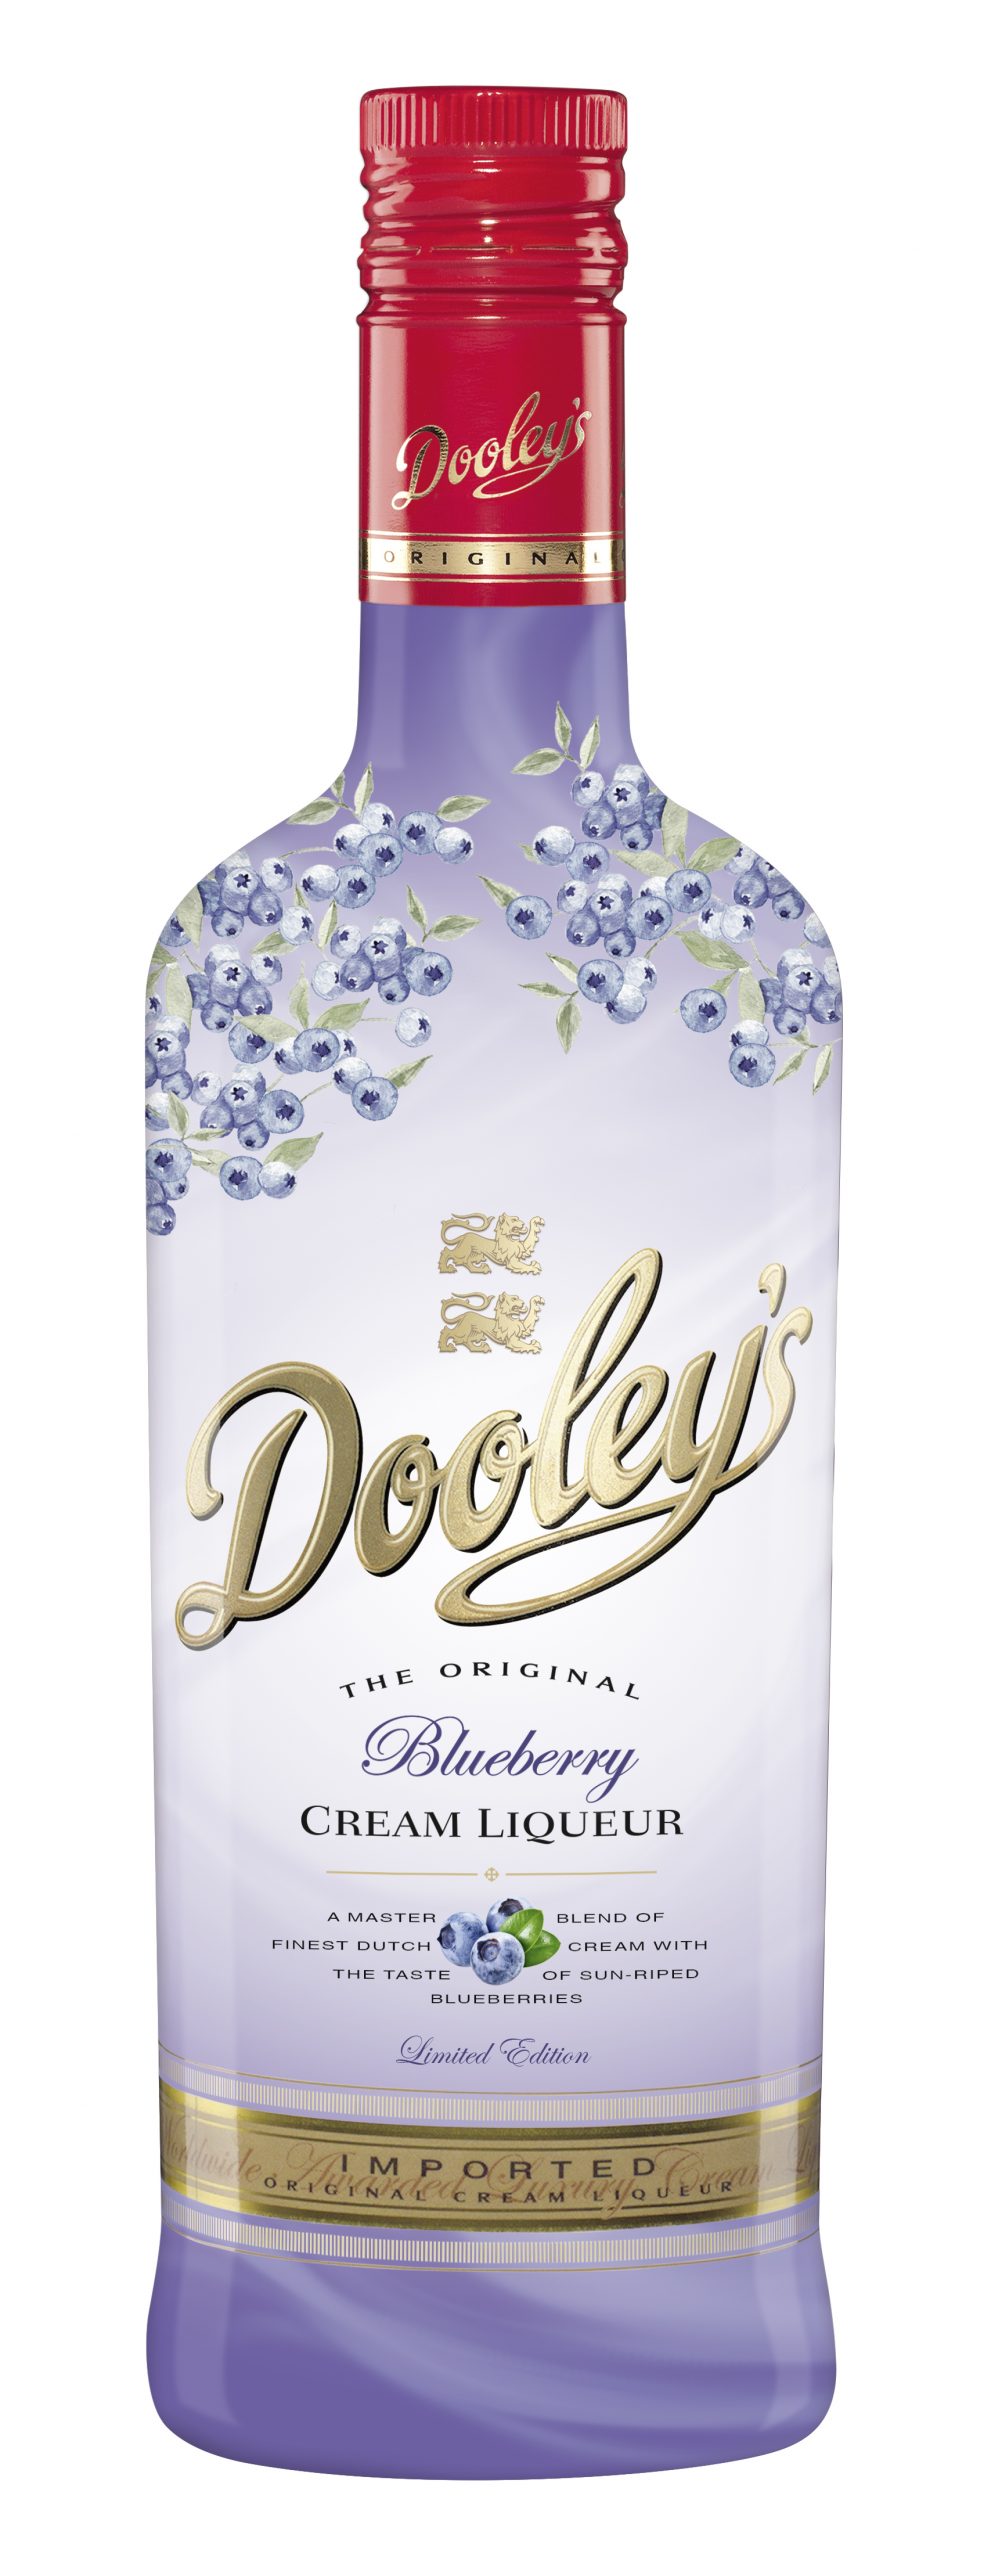 Dooley's Cream Liqueur - Blueberry - Limited Edition 0,7l 15%vol.